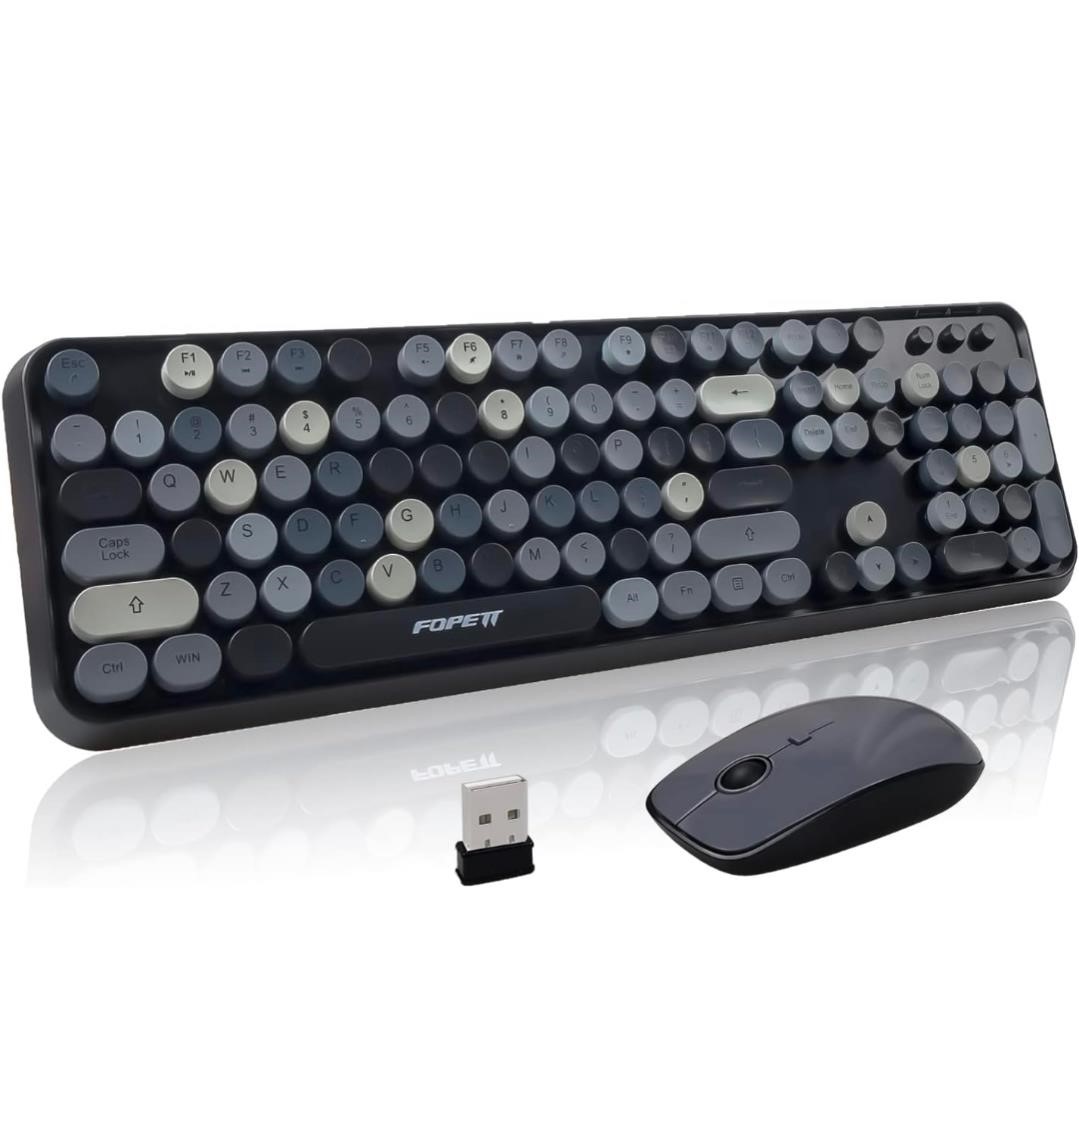 ($56) FOPETT Keyboard and Mouse Sets Wireless